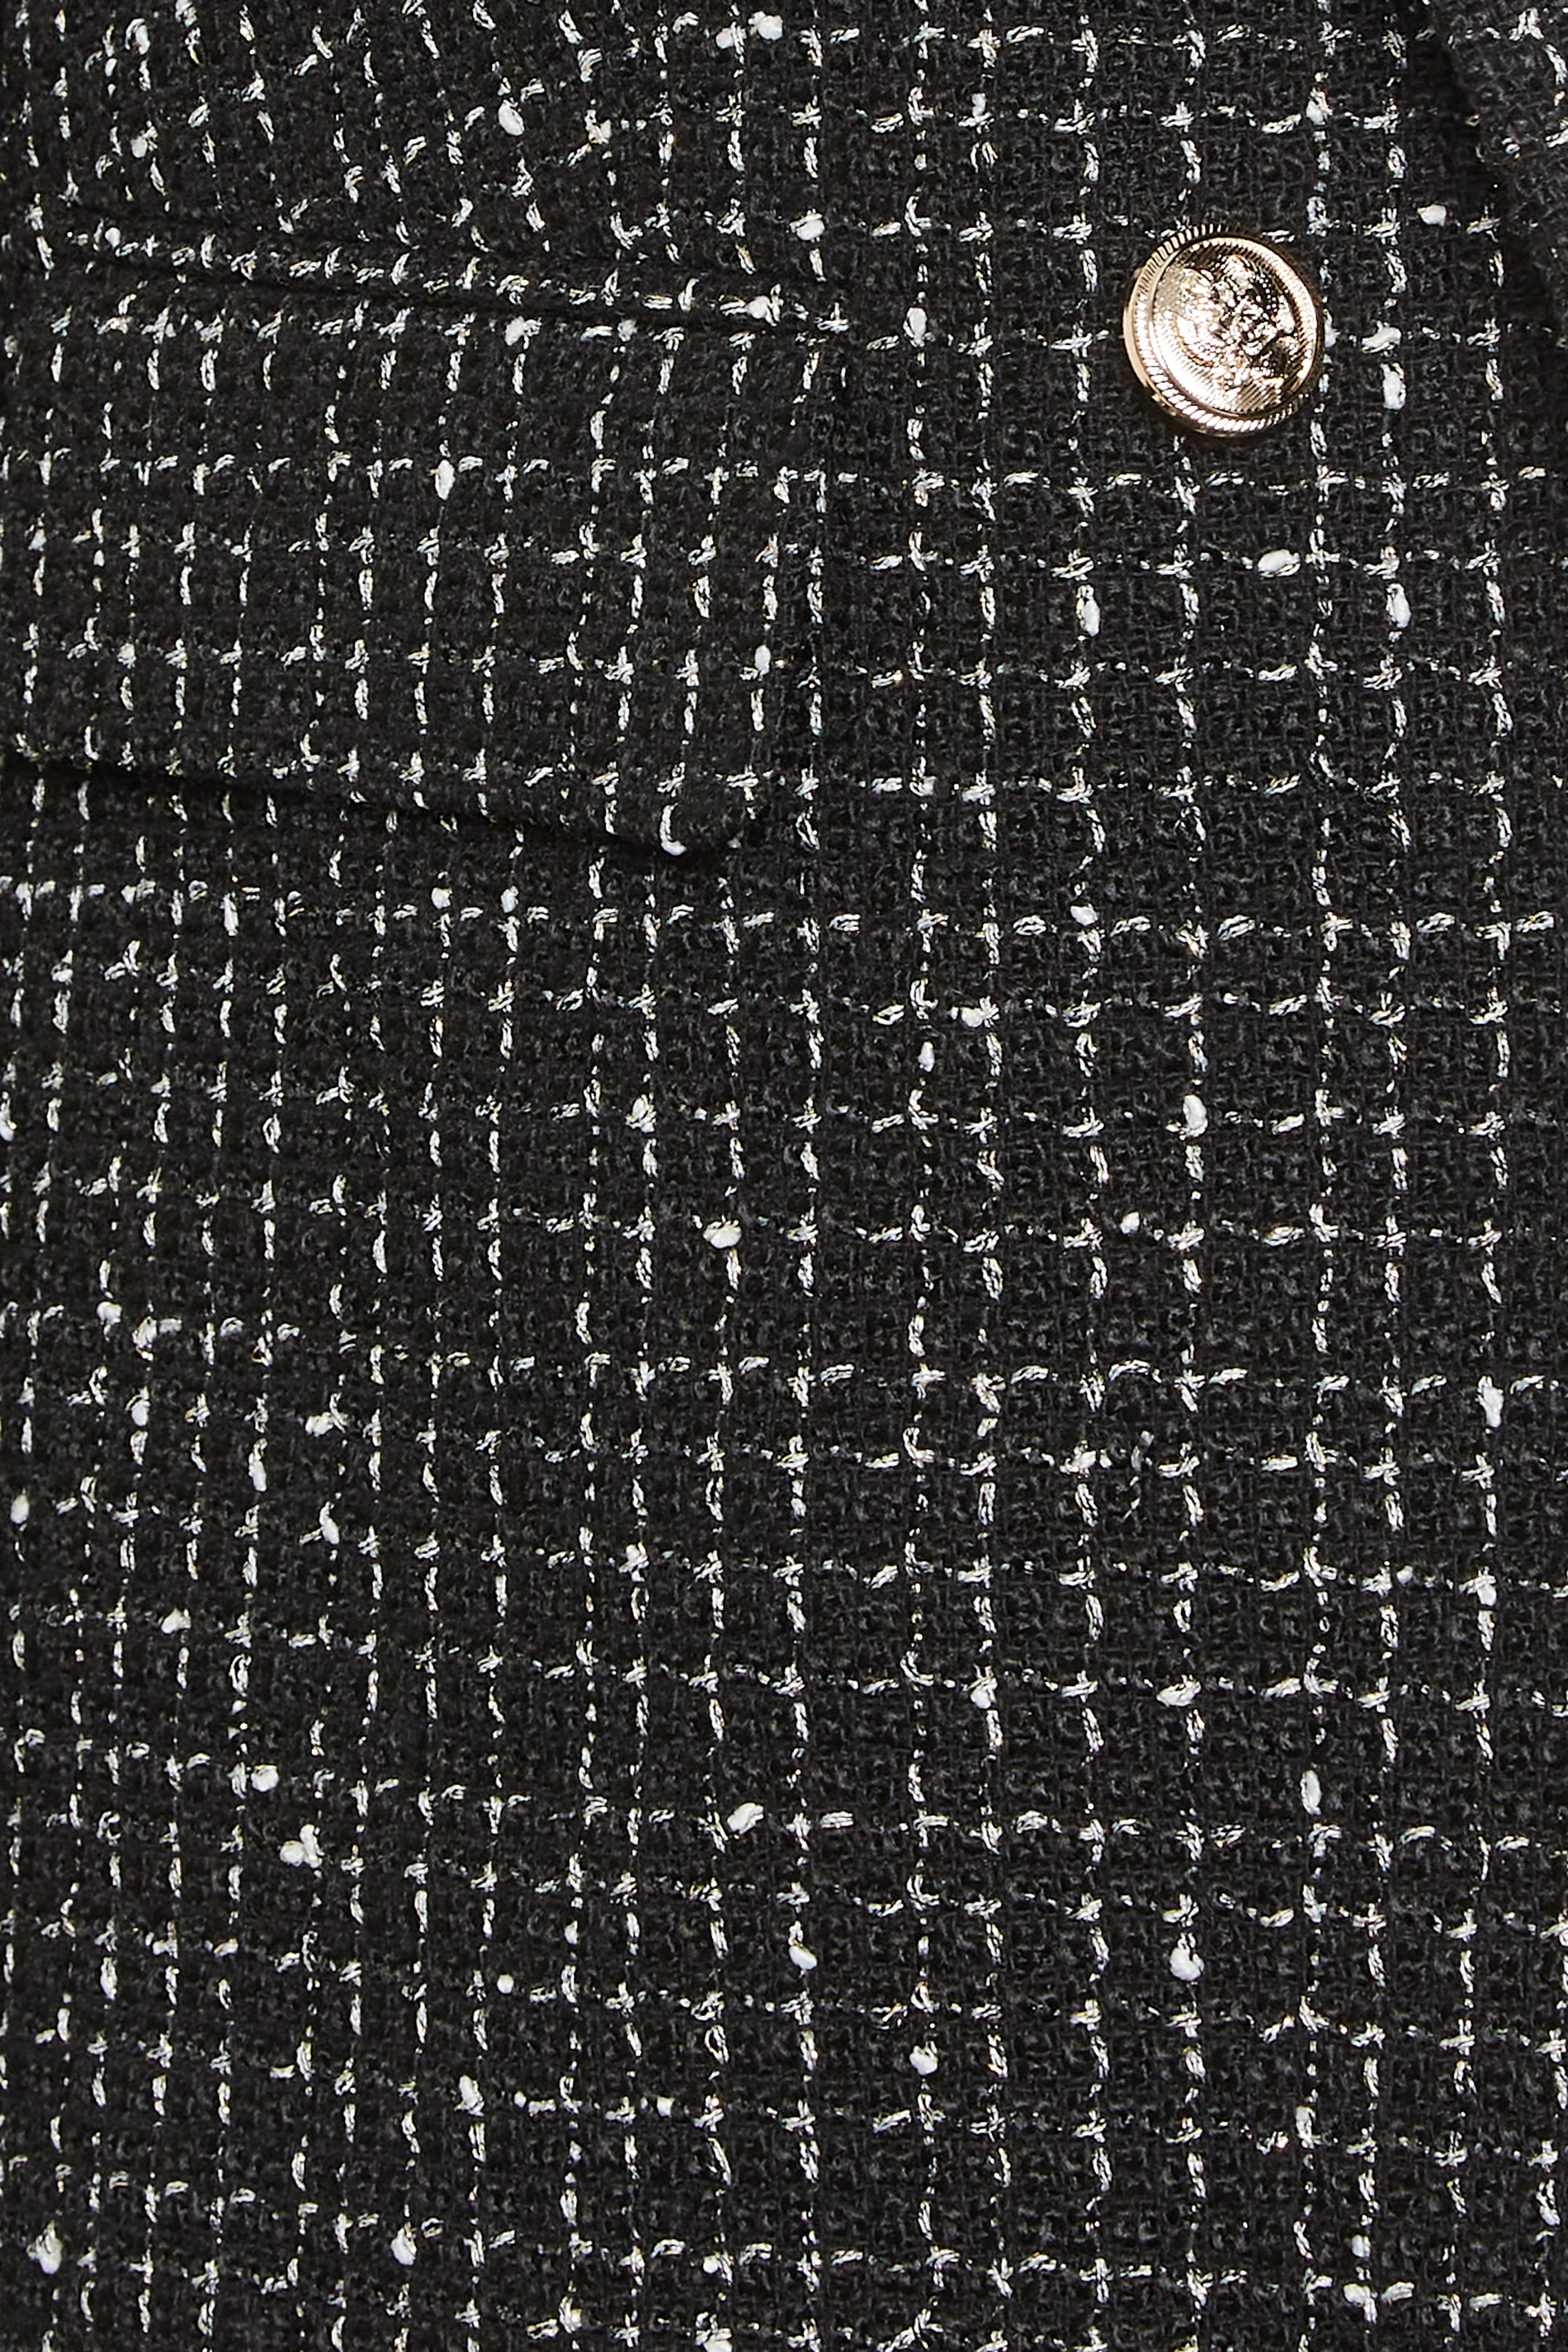 Chanel Black Tweed Jacket with Sequins Size 36 (4)